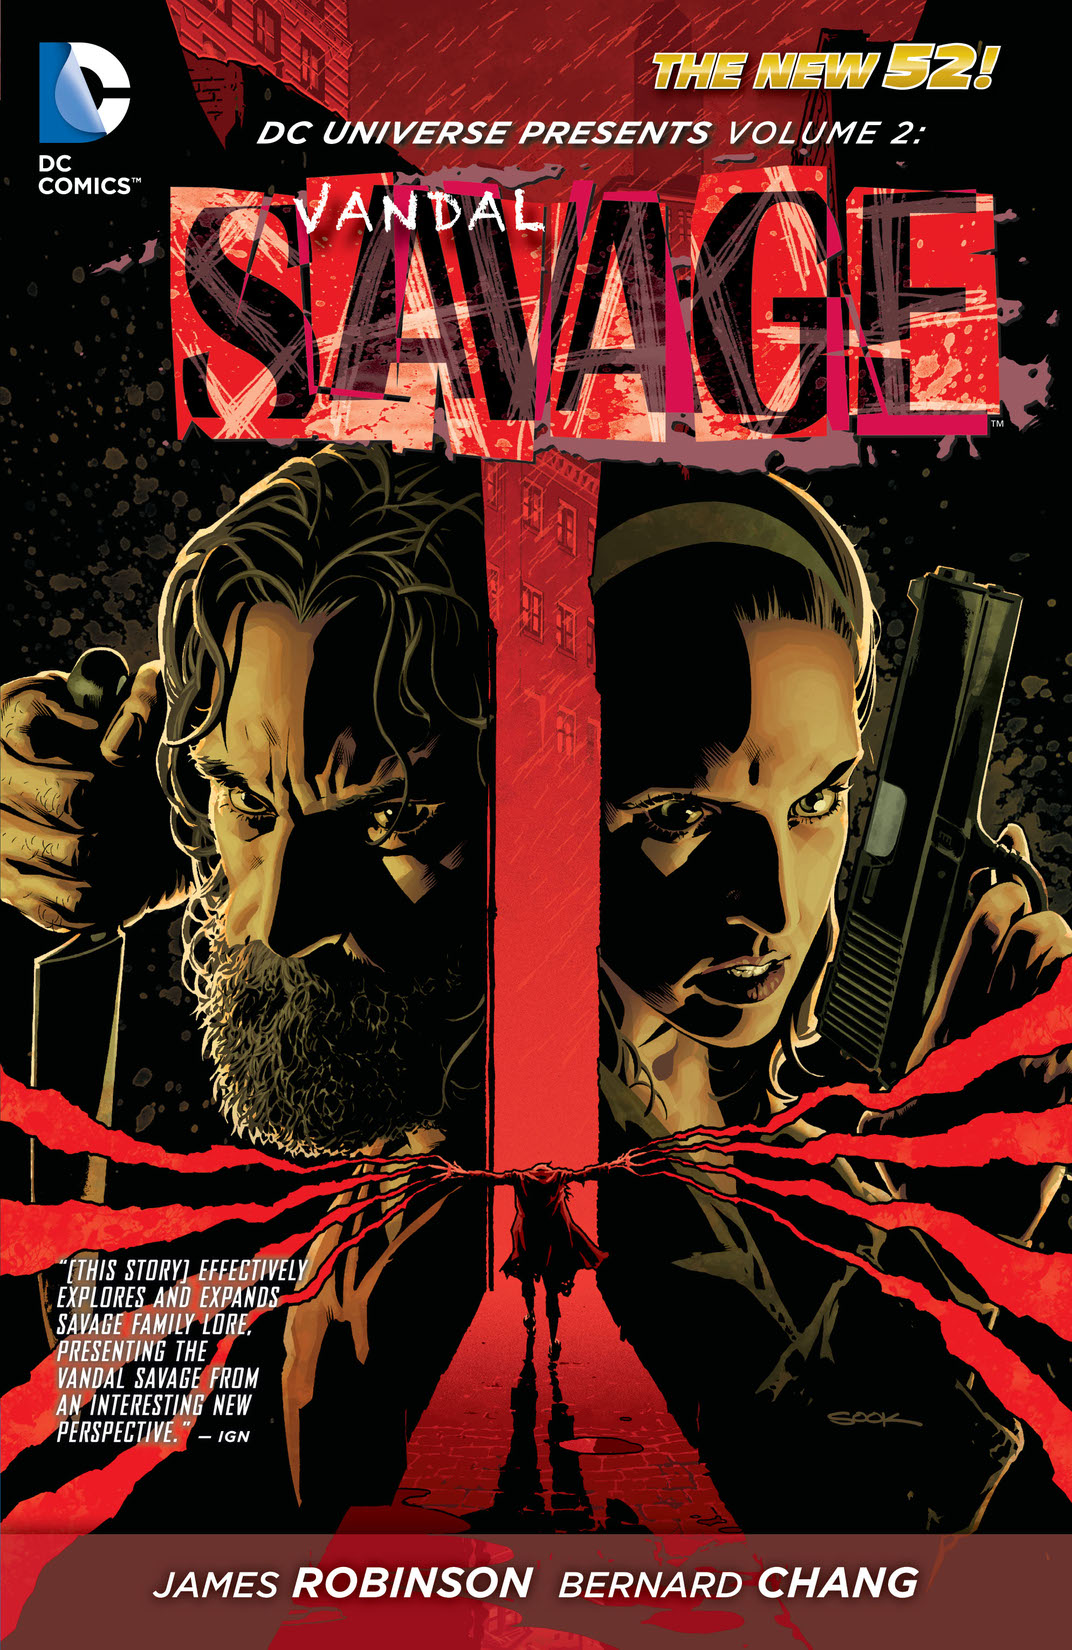 DC Universe Presents Vol. 2: Vandal Savage preview images